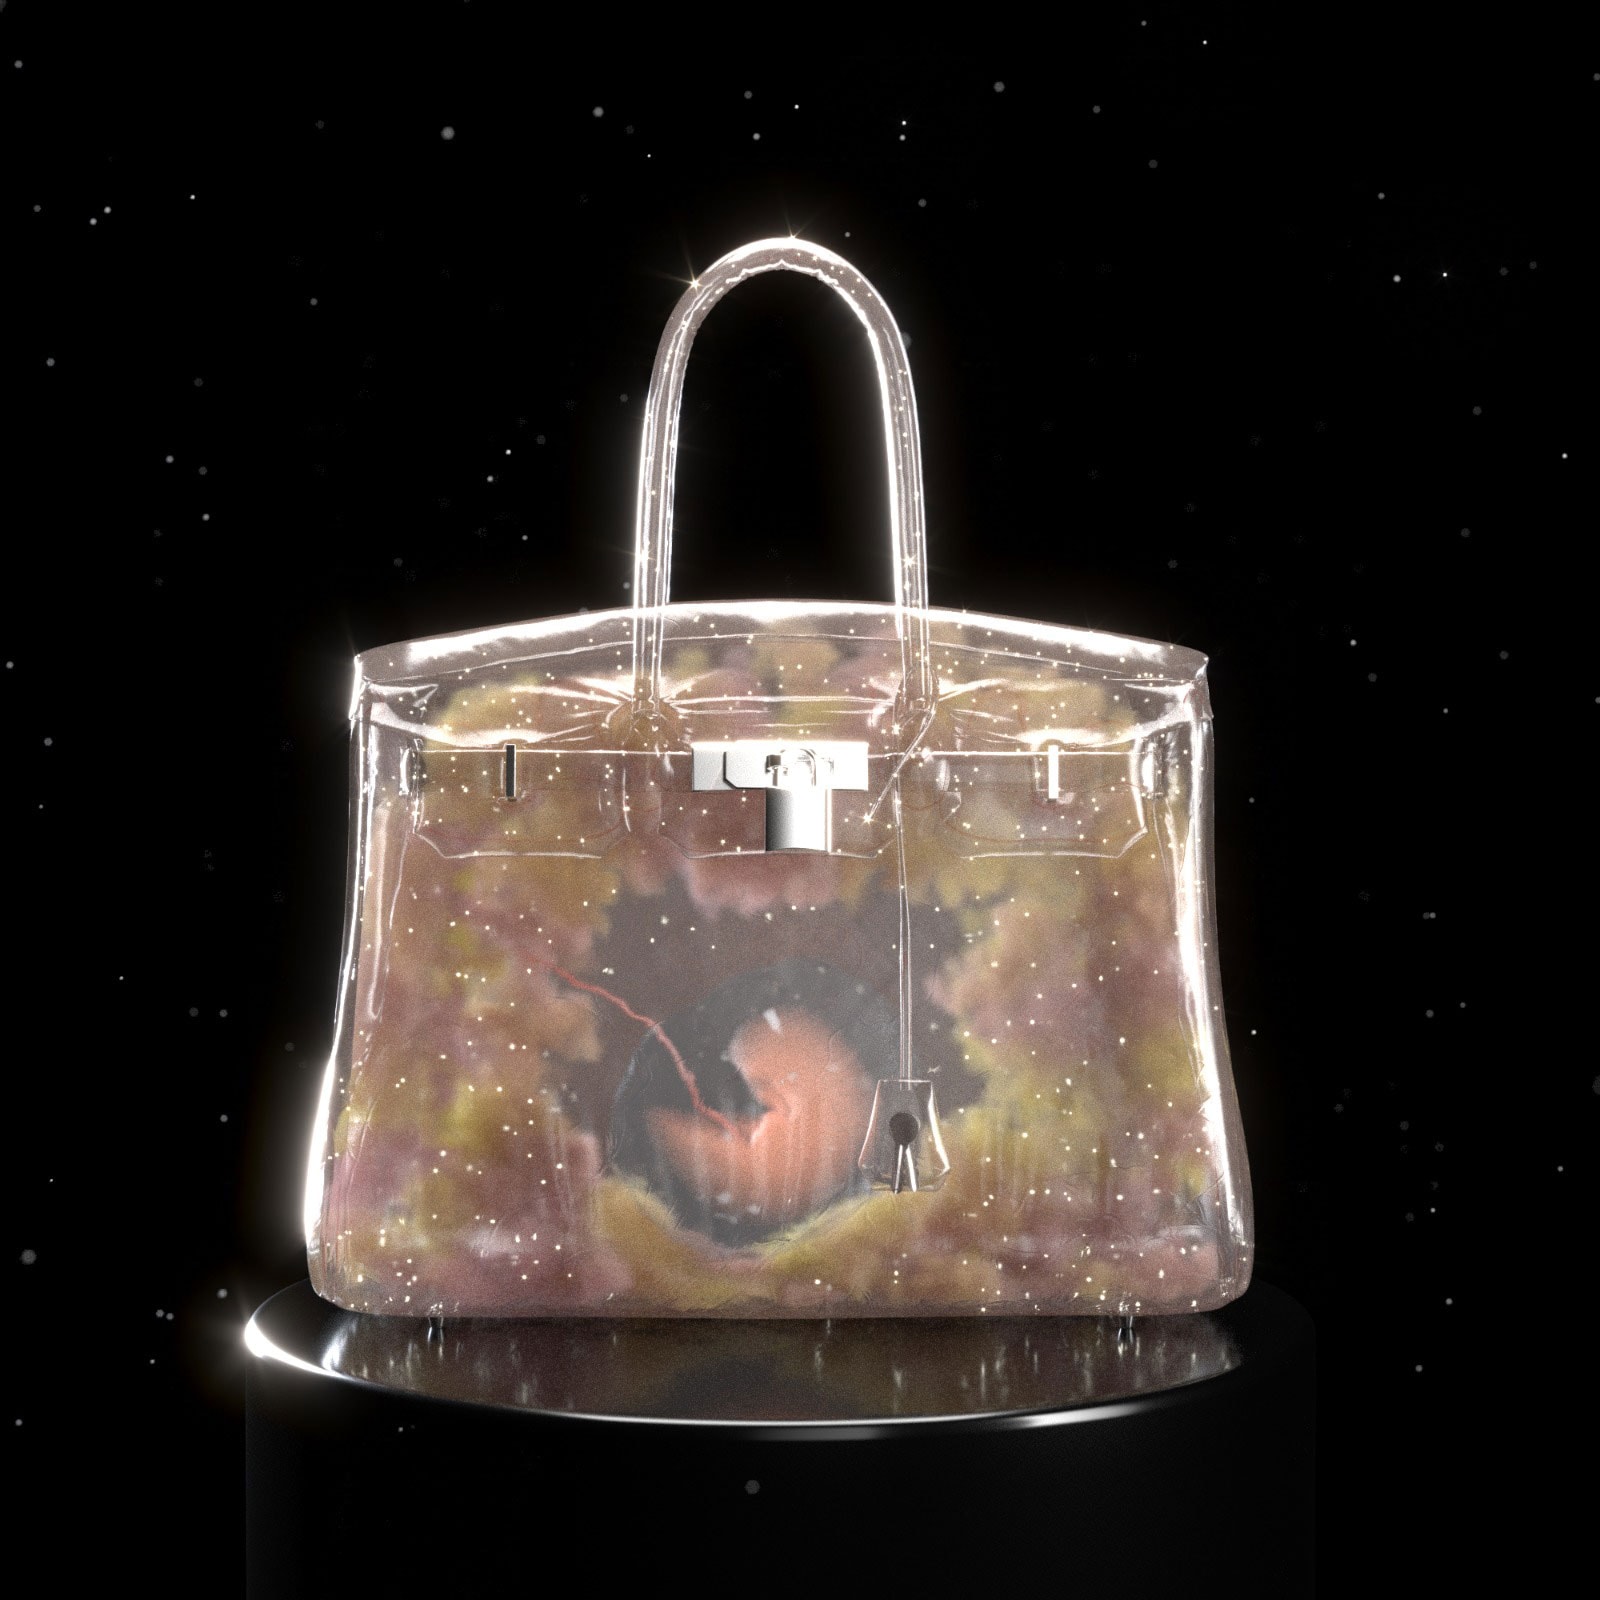 hermes baby birkin handbag nft art basic space auction mason rothschild eric ramirez price info 